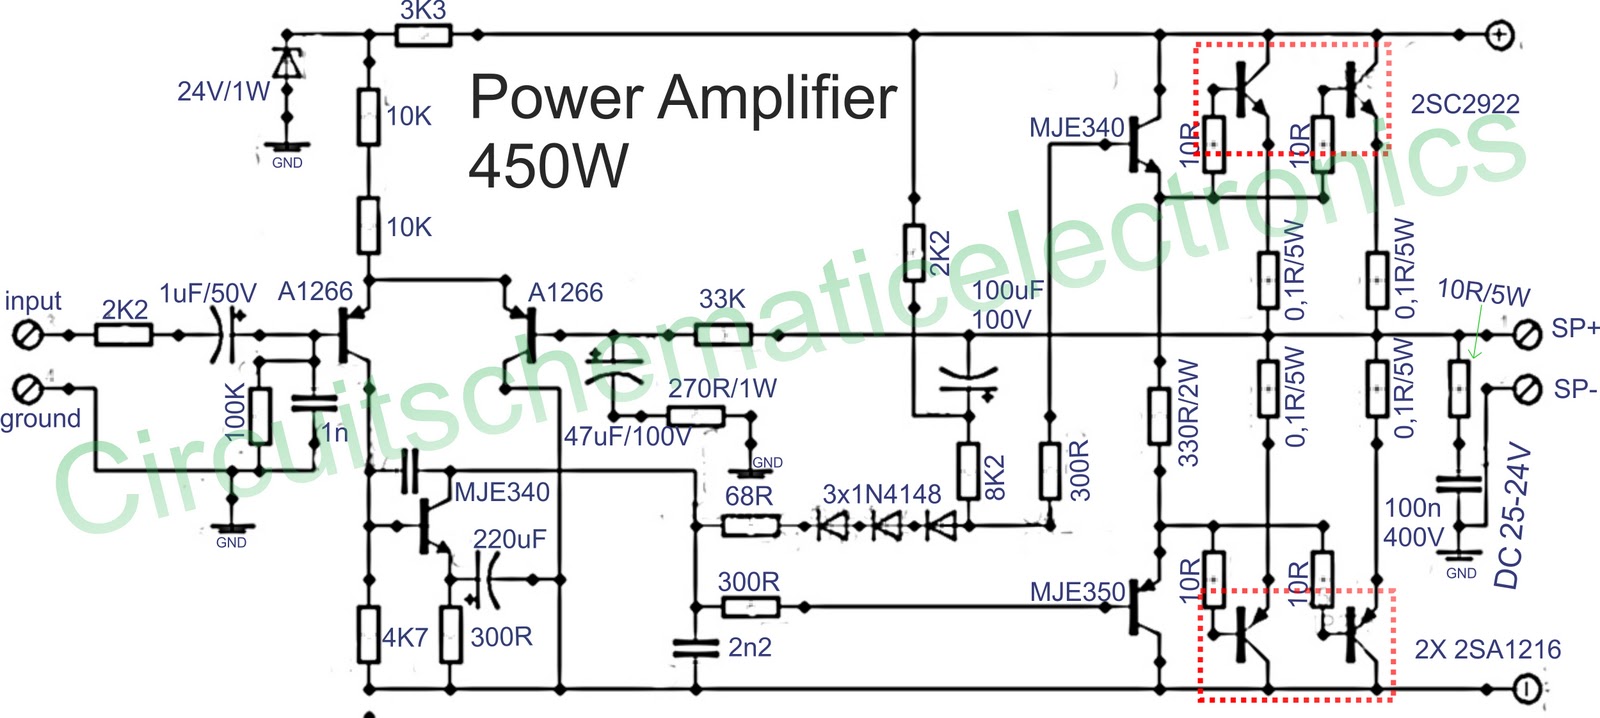 Transistor 5000w Audio Amplifier Circuit Diagram - 450w Amplifier Schematics - Transistor 5000w Audio Amplifier Circuit Diagram